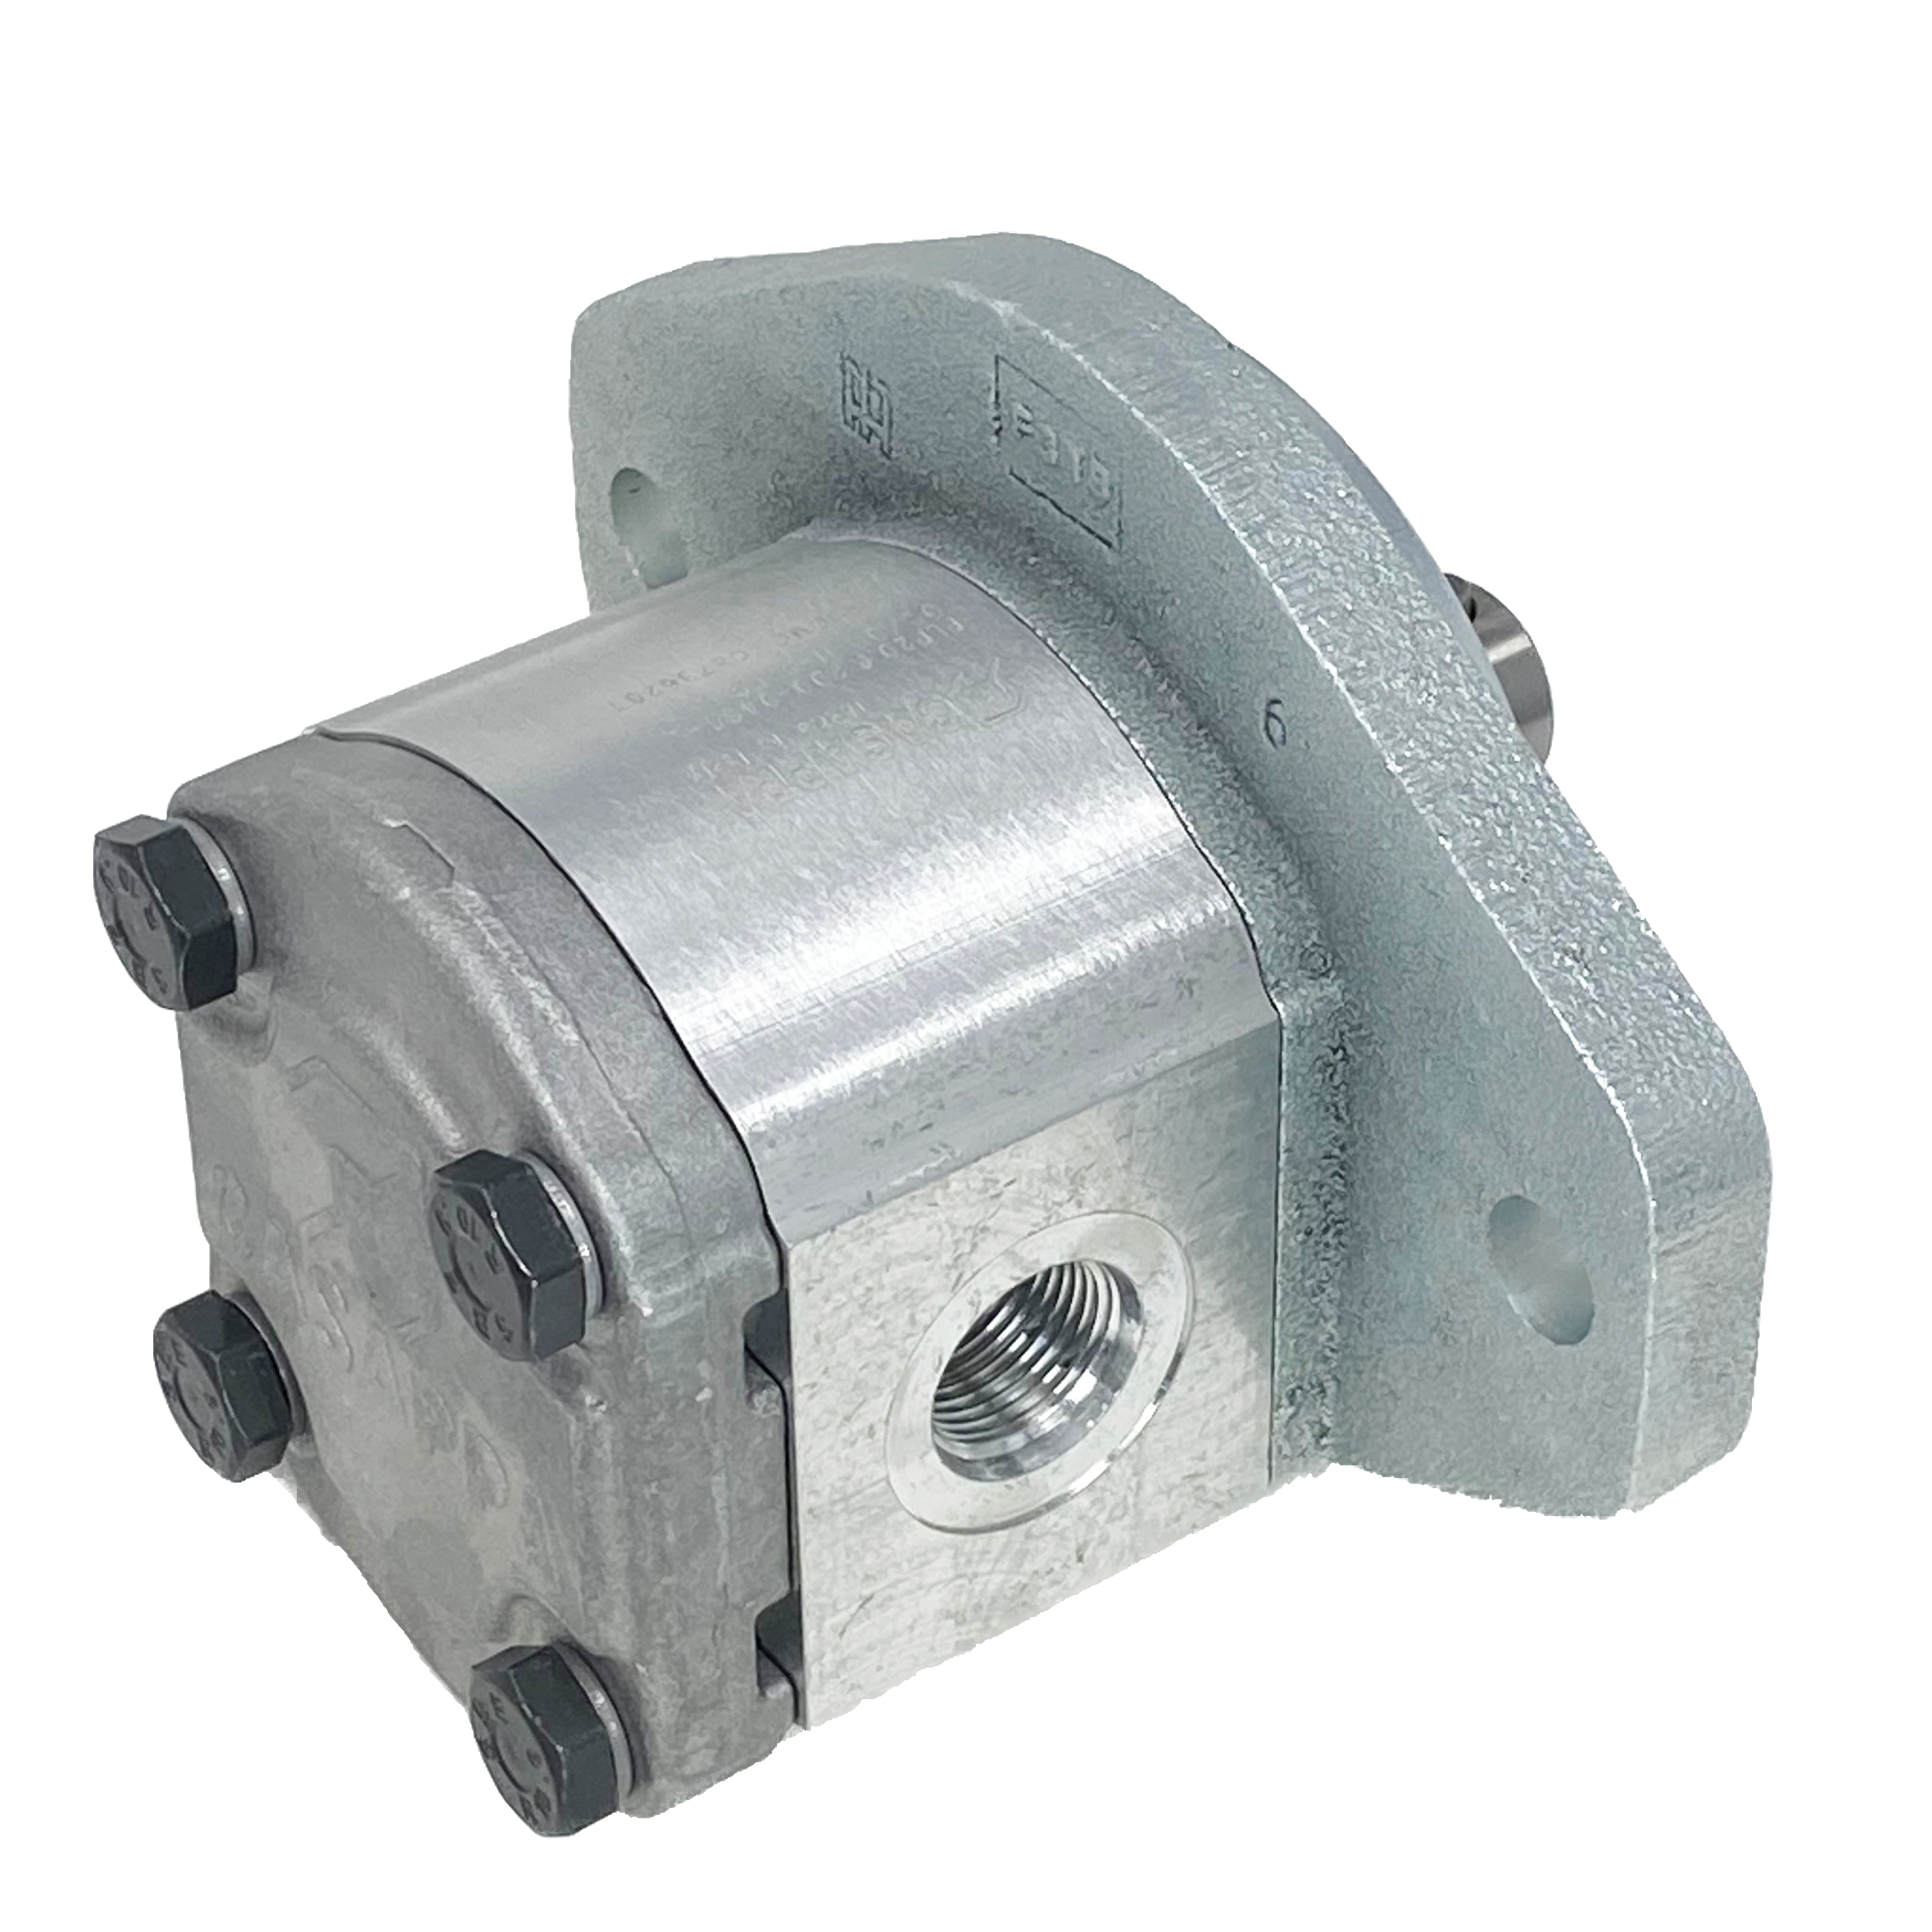 PLM20.8R0-31S1-LOC/OC-N-EL : Casappa Polaris Gear Motor, 8.26cc, 3625psi Rated, 3500RPM, Reversible Rear External Drain, 5/8" Bore x 5/32" Key Shaft, SAE A 2-Bolt Flange, 0.625 (5/8") #10 SAE Inlet, 0.625 (5/8") #10 SAE Outlet, Aluminum Body & Flange